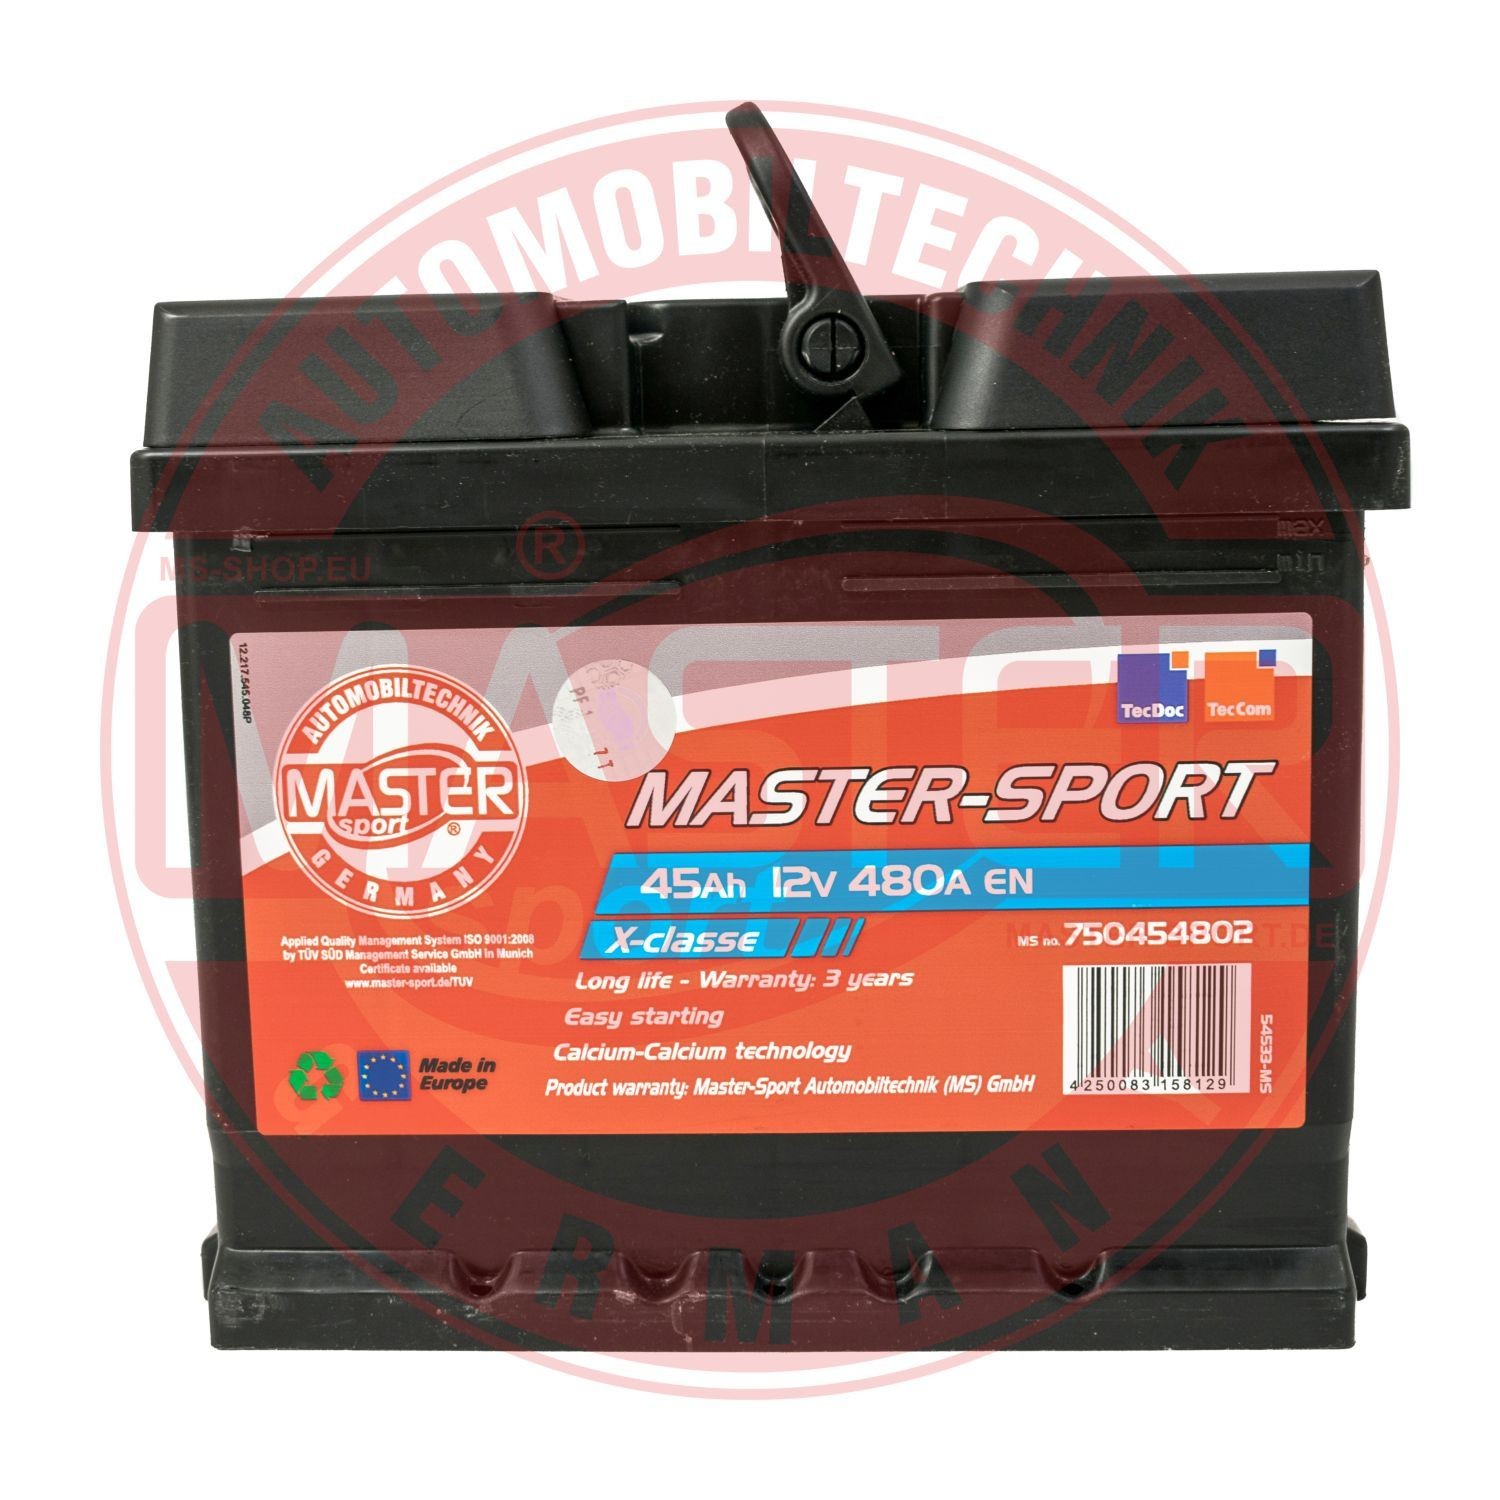 780454802 MASTER-SPORT Car battery Opel MERIVA review